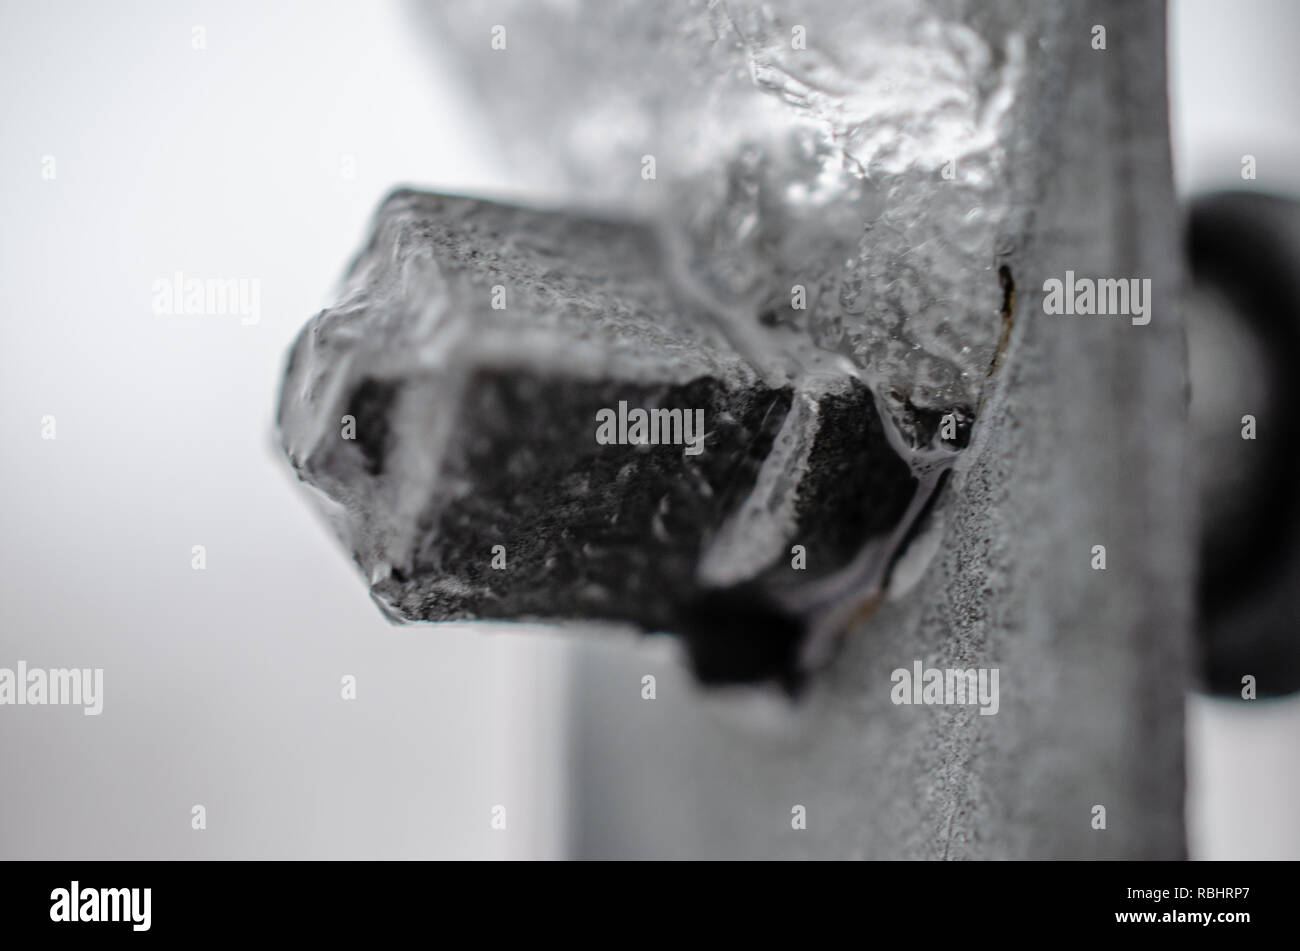 Icy bolt nut close-up Stock Photo